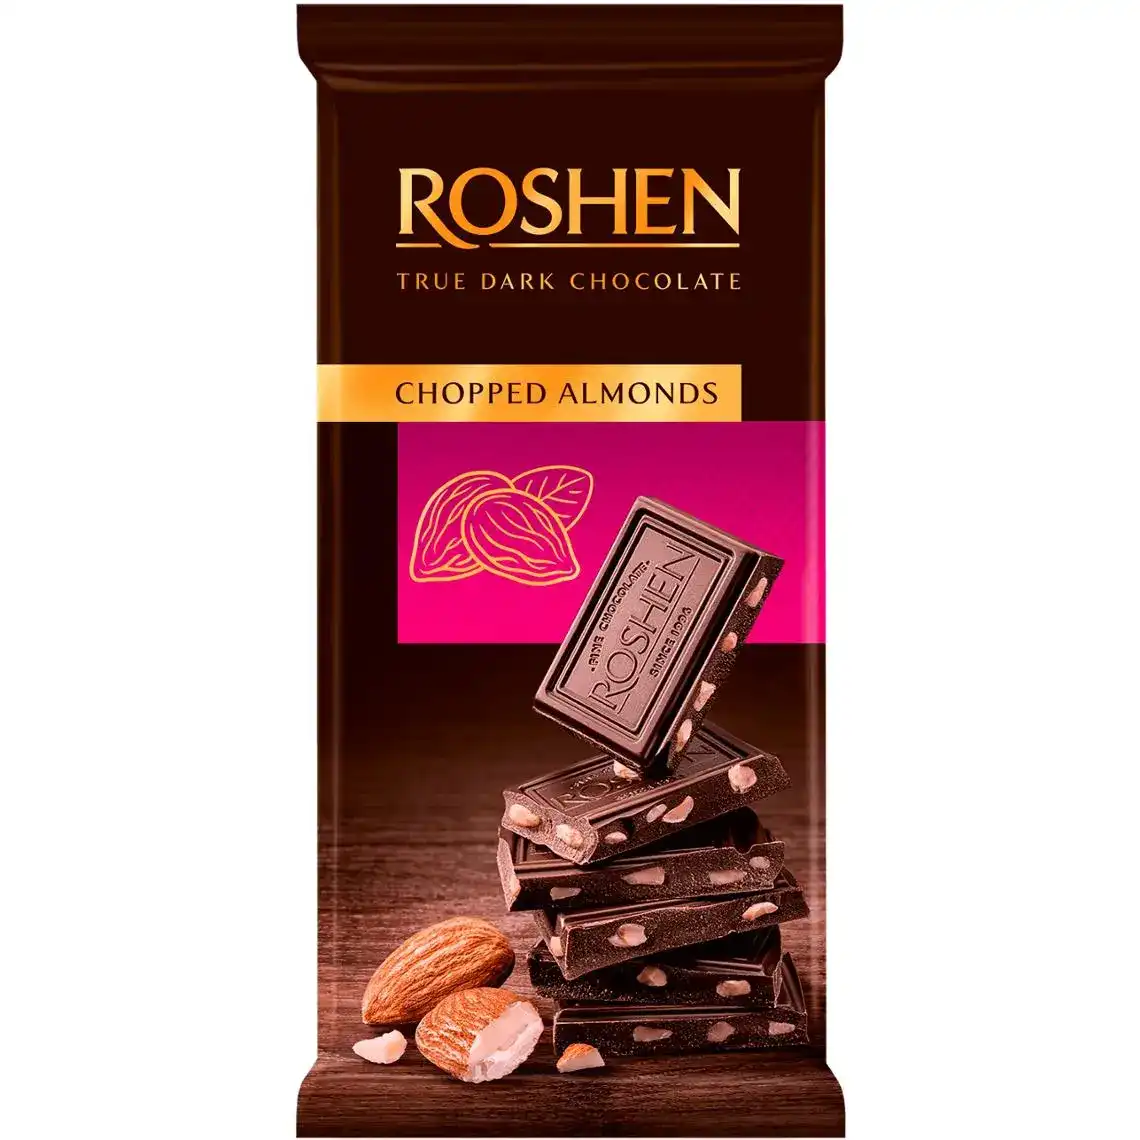 Шоколад Roshen чорний з підсоленим мигдалем 85 г